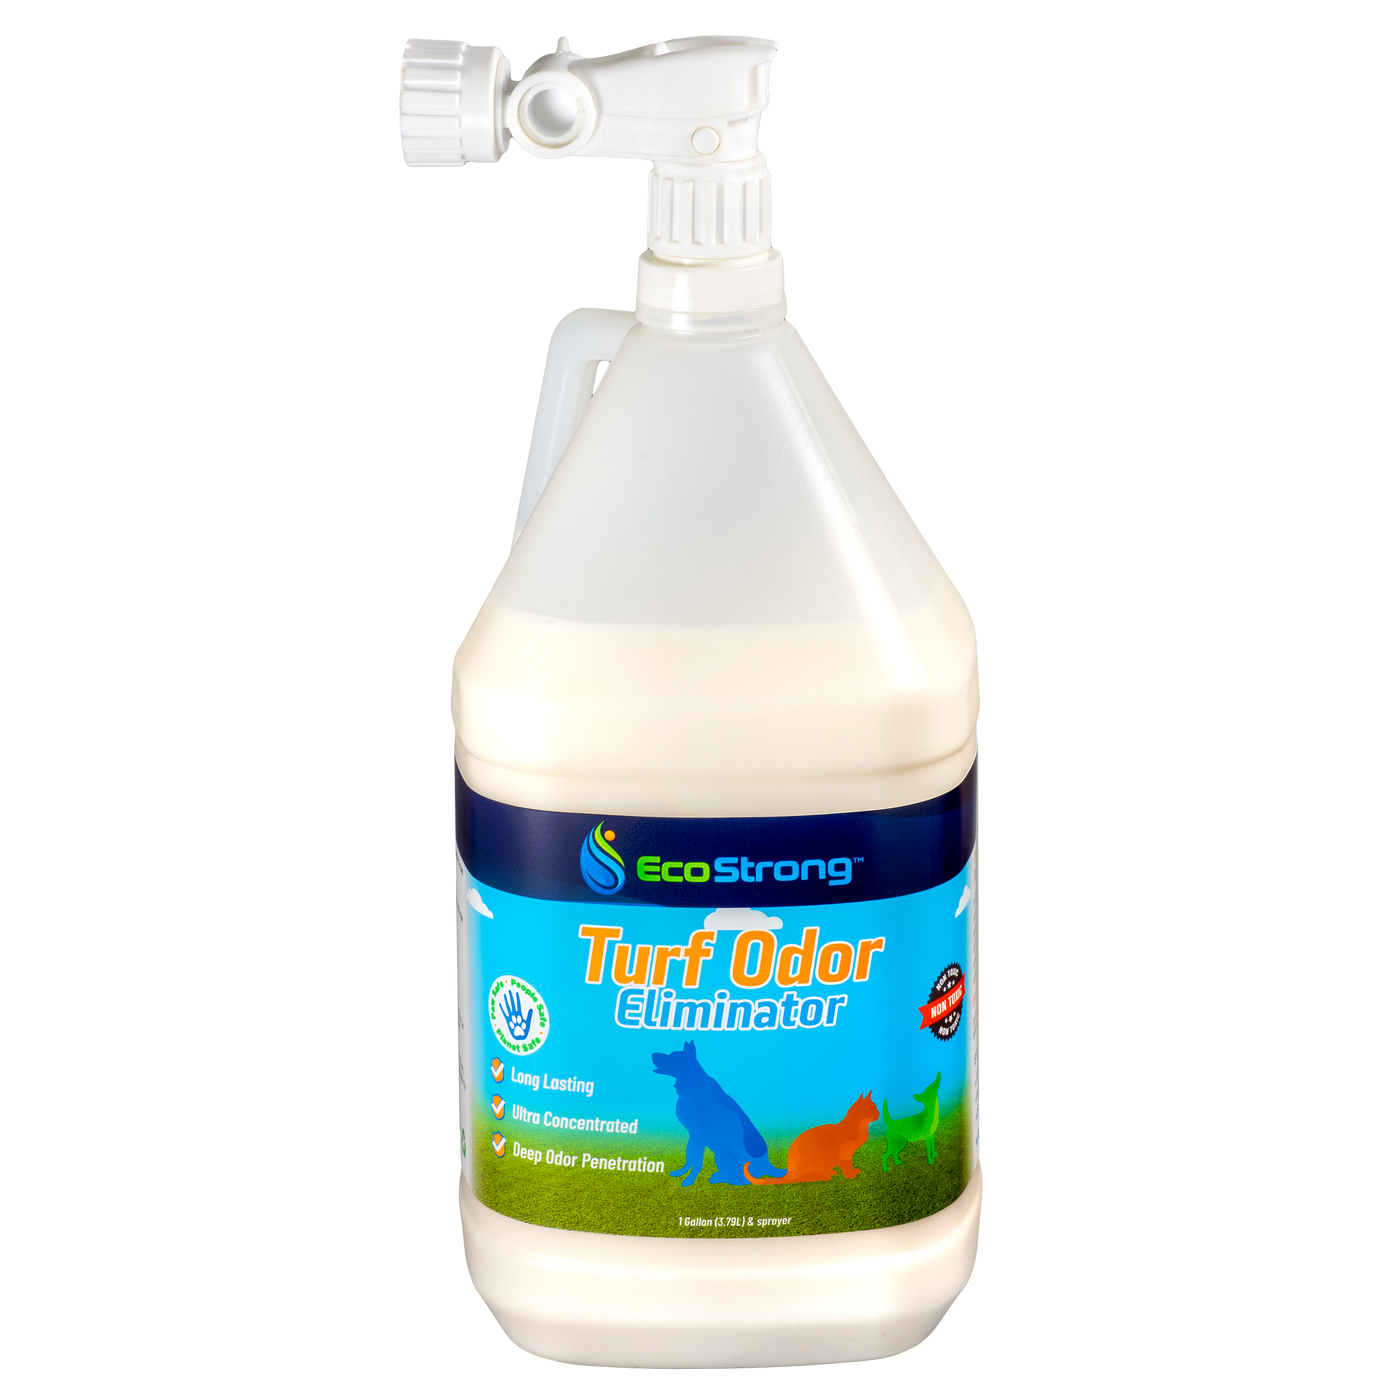 EcoStrong Turf Odor Eliminator#size_1-gallon-hose-end-sprayer-jug